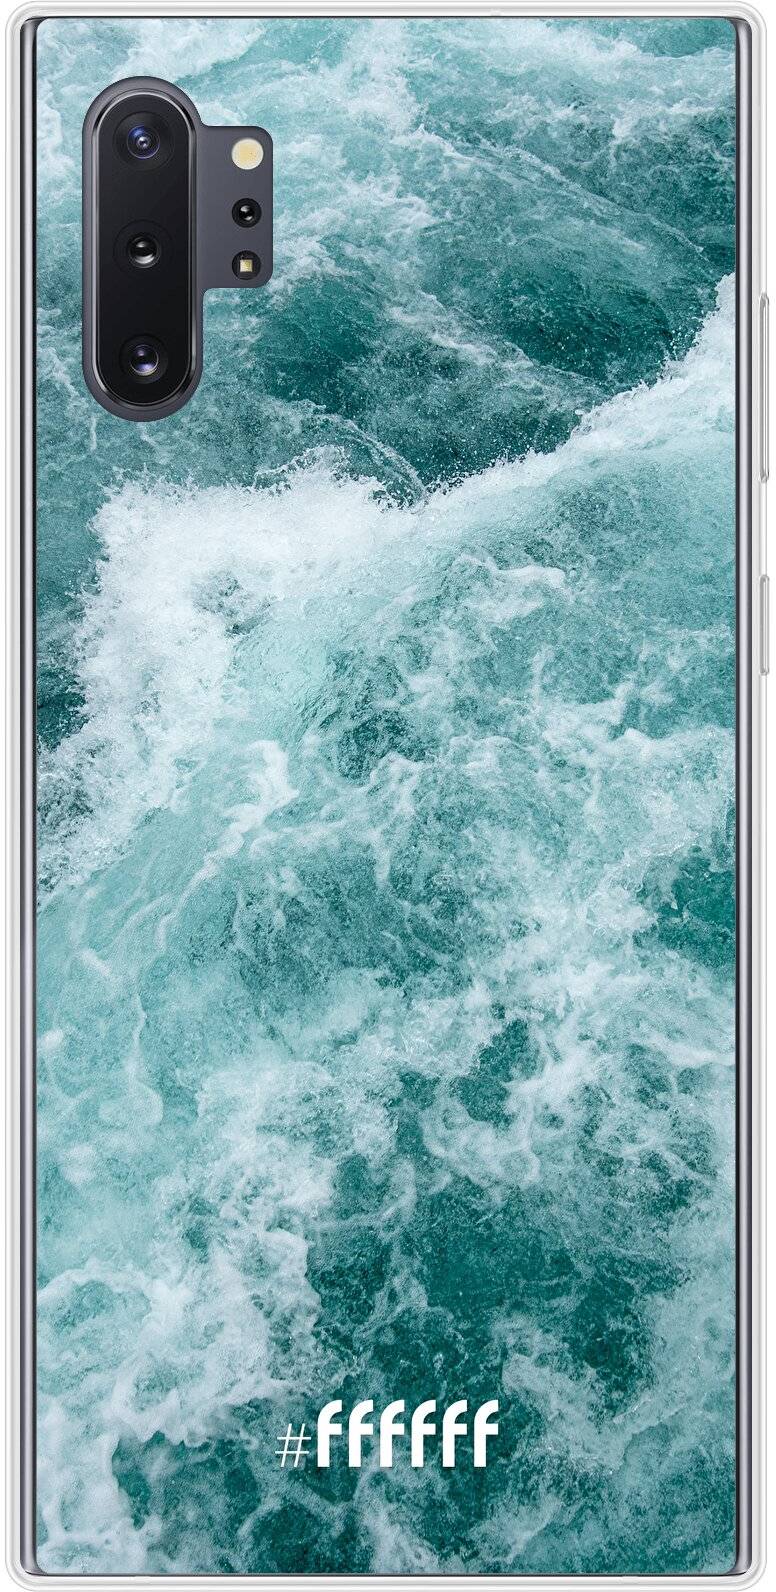 Whitecap Waves Galaxy Note 10 Plus